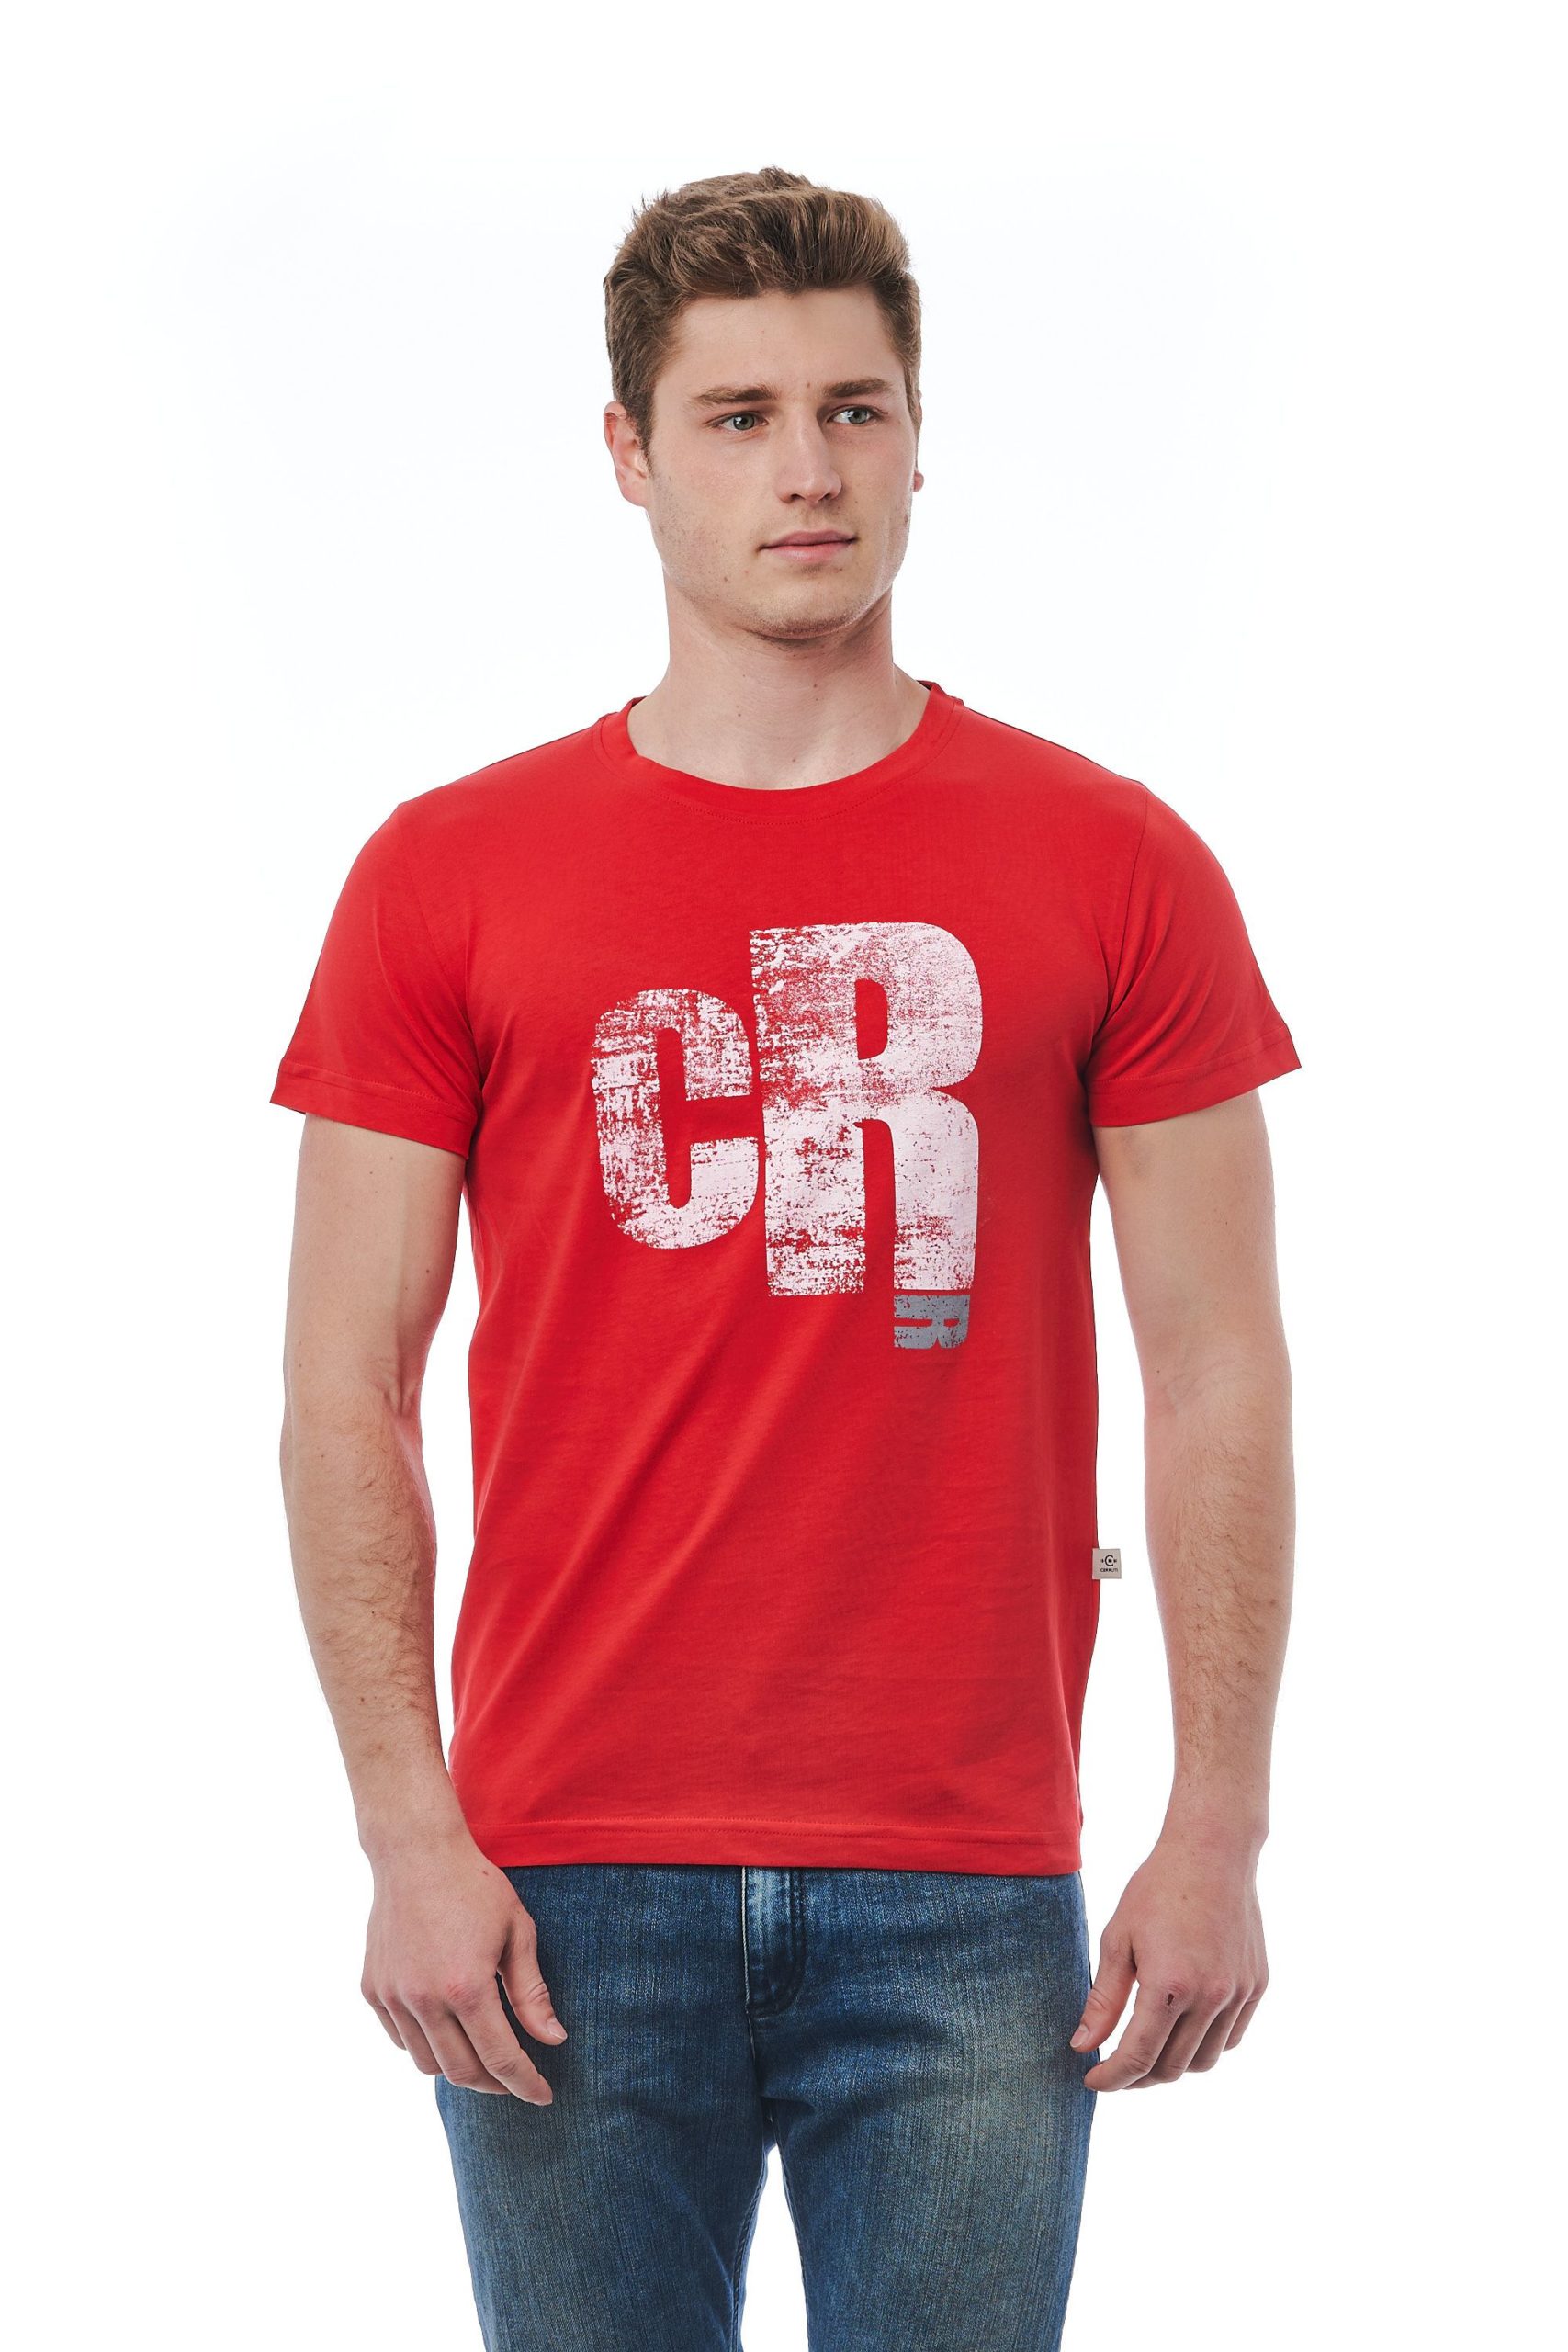 Cerruti 1881 Men's Rosso T-Shirt Red CE1410070 - M